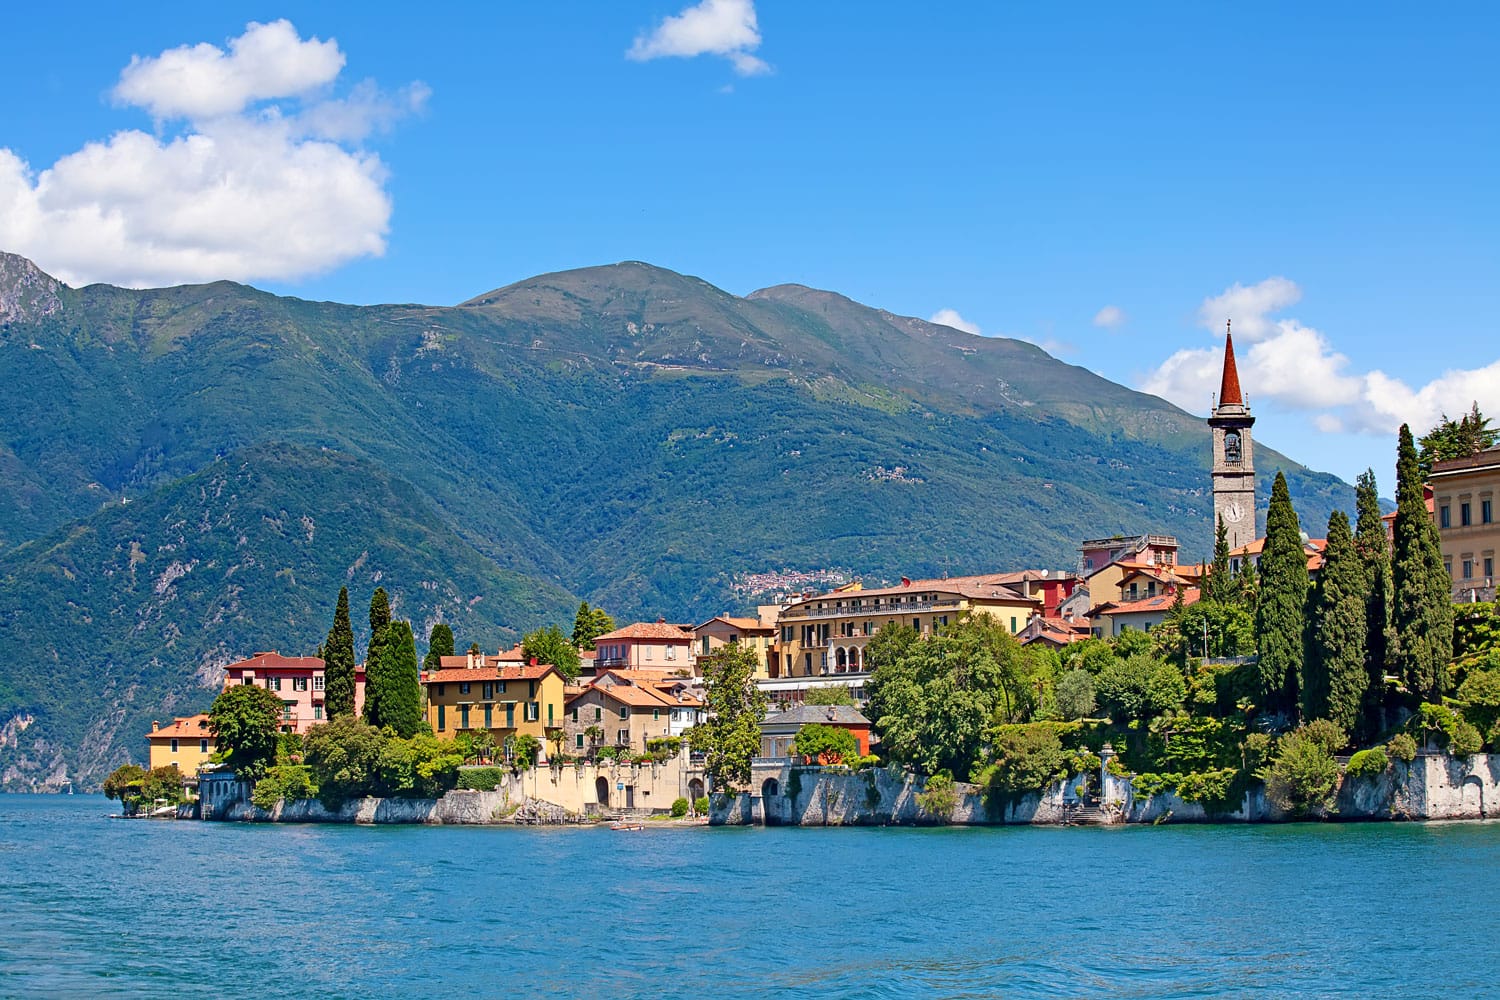 Panoramic view of Varenna town on Lake Como, Italy